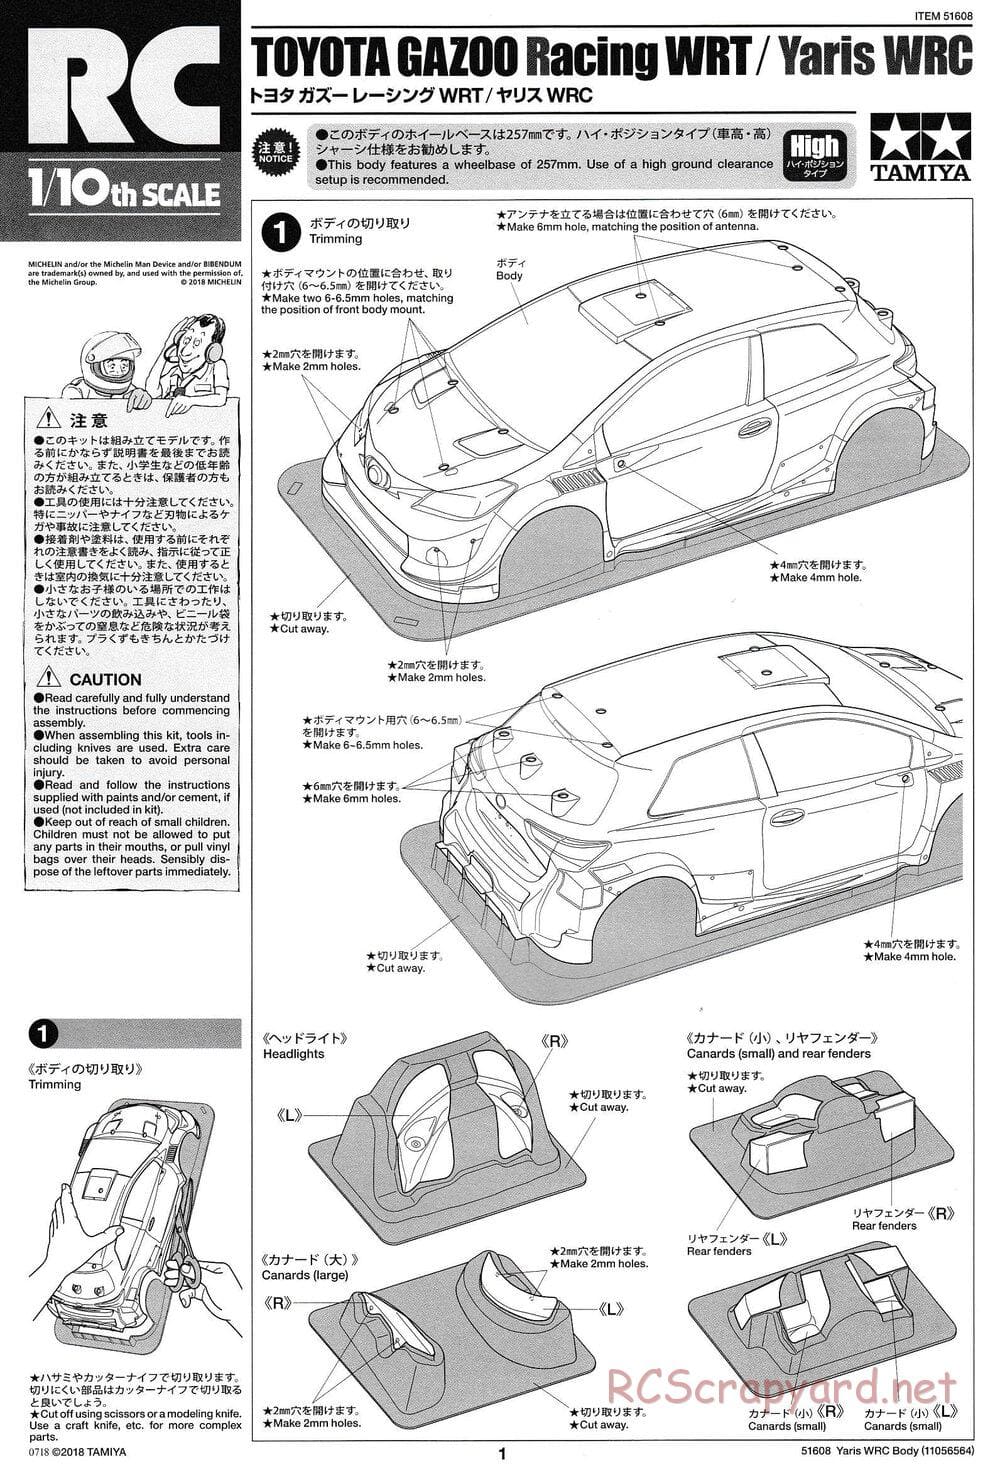 Tamiya - Toyota Gazoo Racing WRT / Yaris WRC - TT-02 Chassis - Body Manual - Page 1